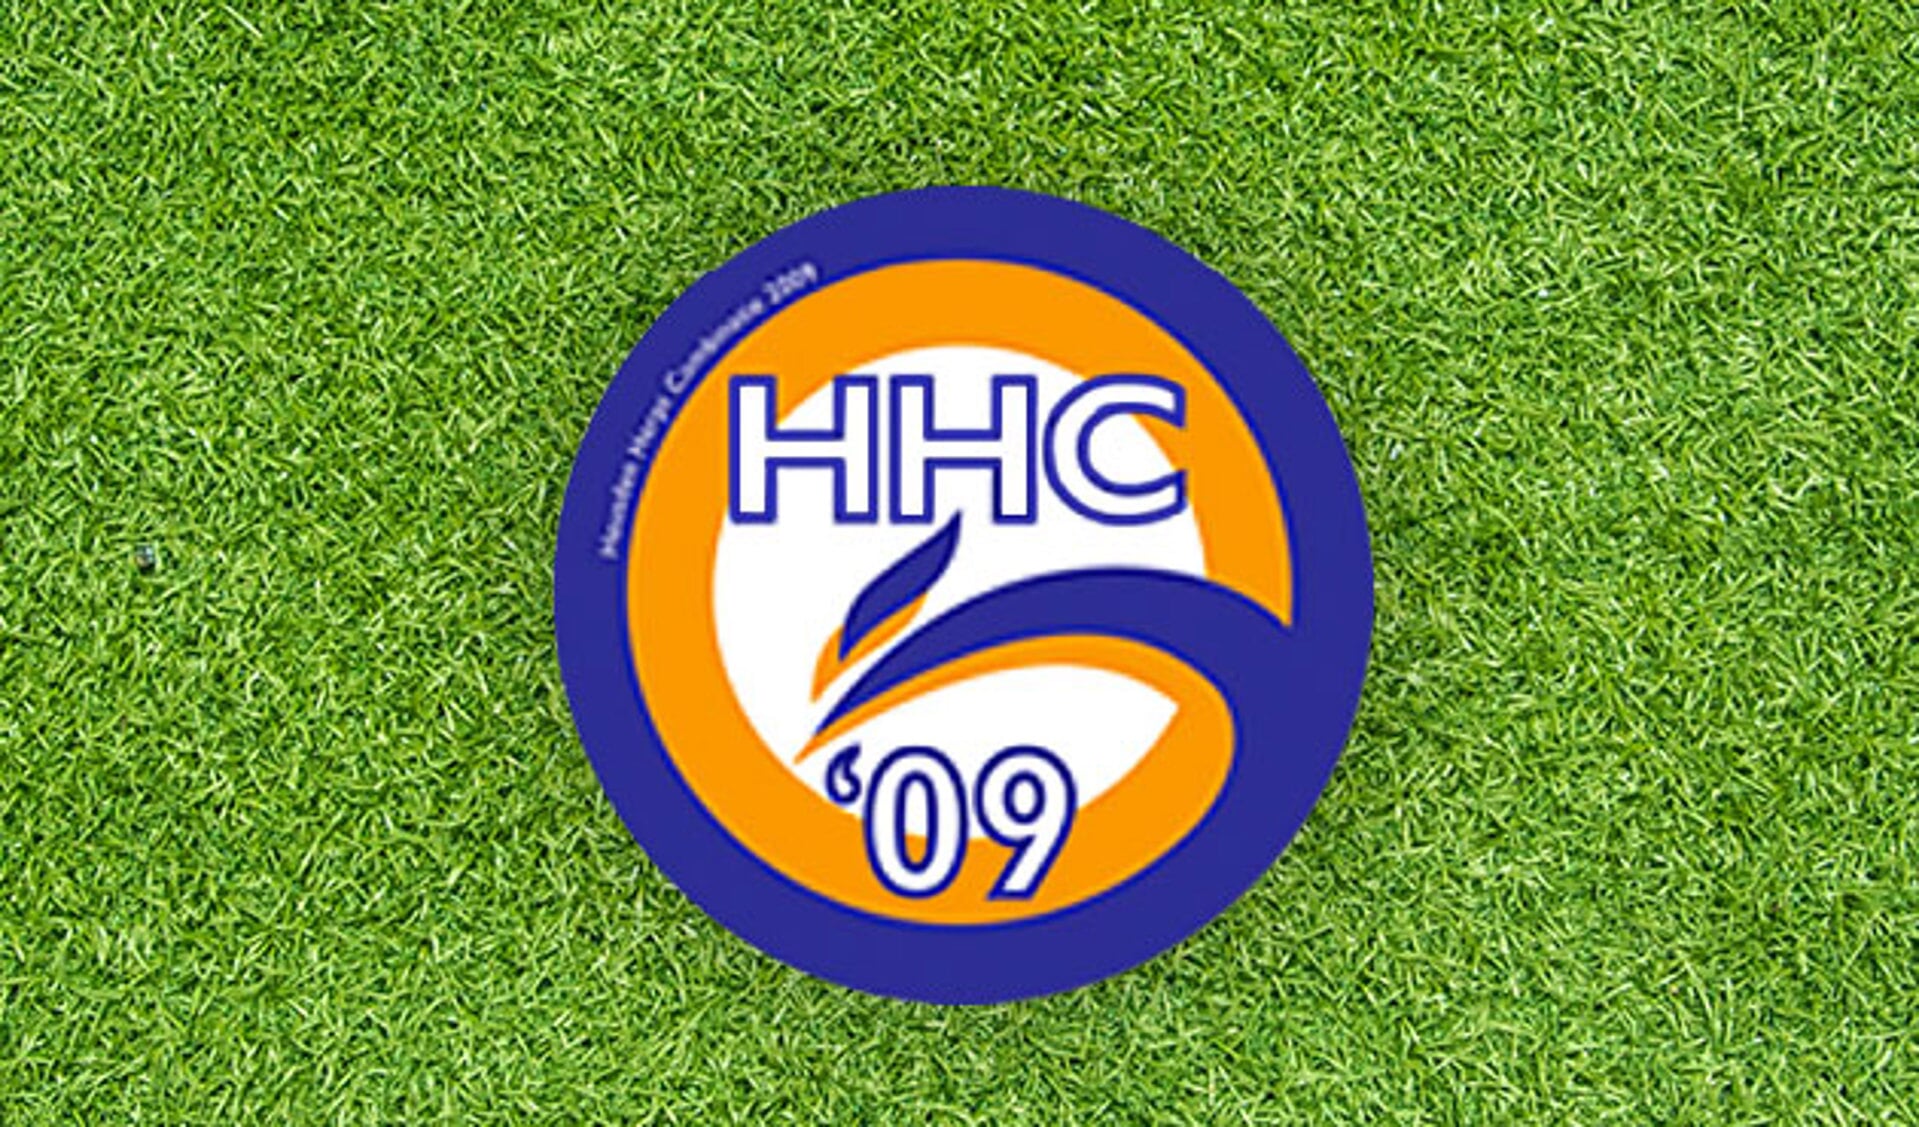 HHC'09 organiseert derde editie feestdag